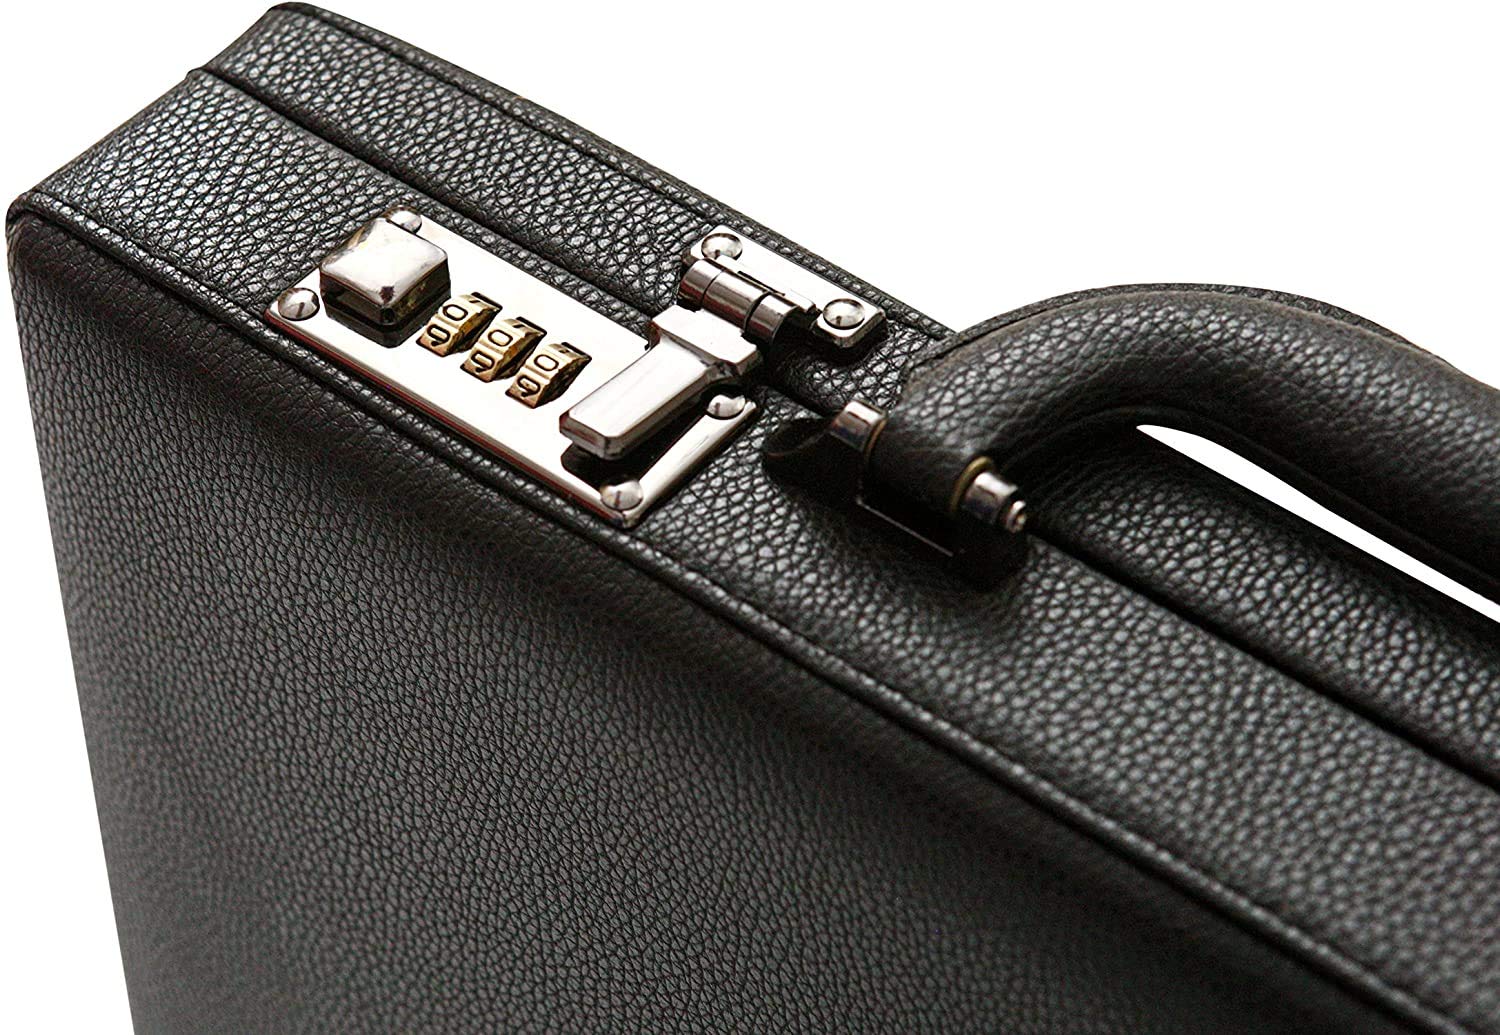 Tassia Slimline Attache Business Briefcase - Leather Look Pu